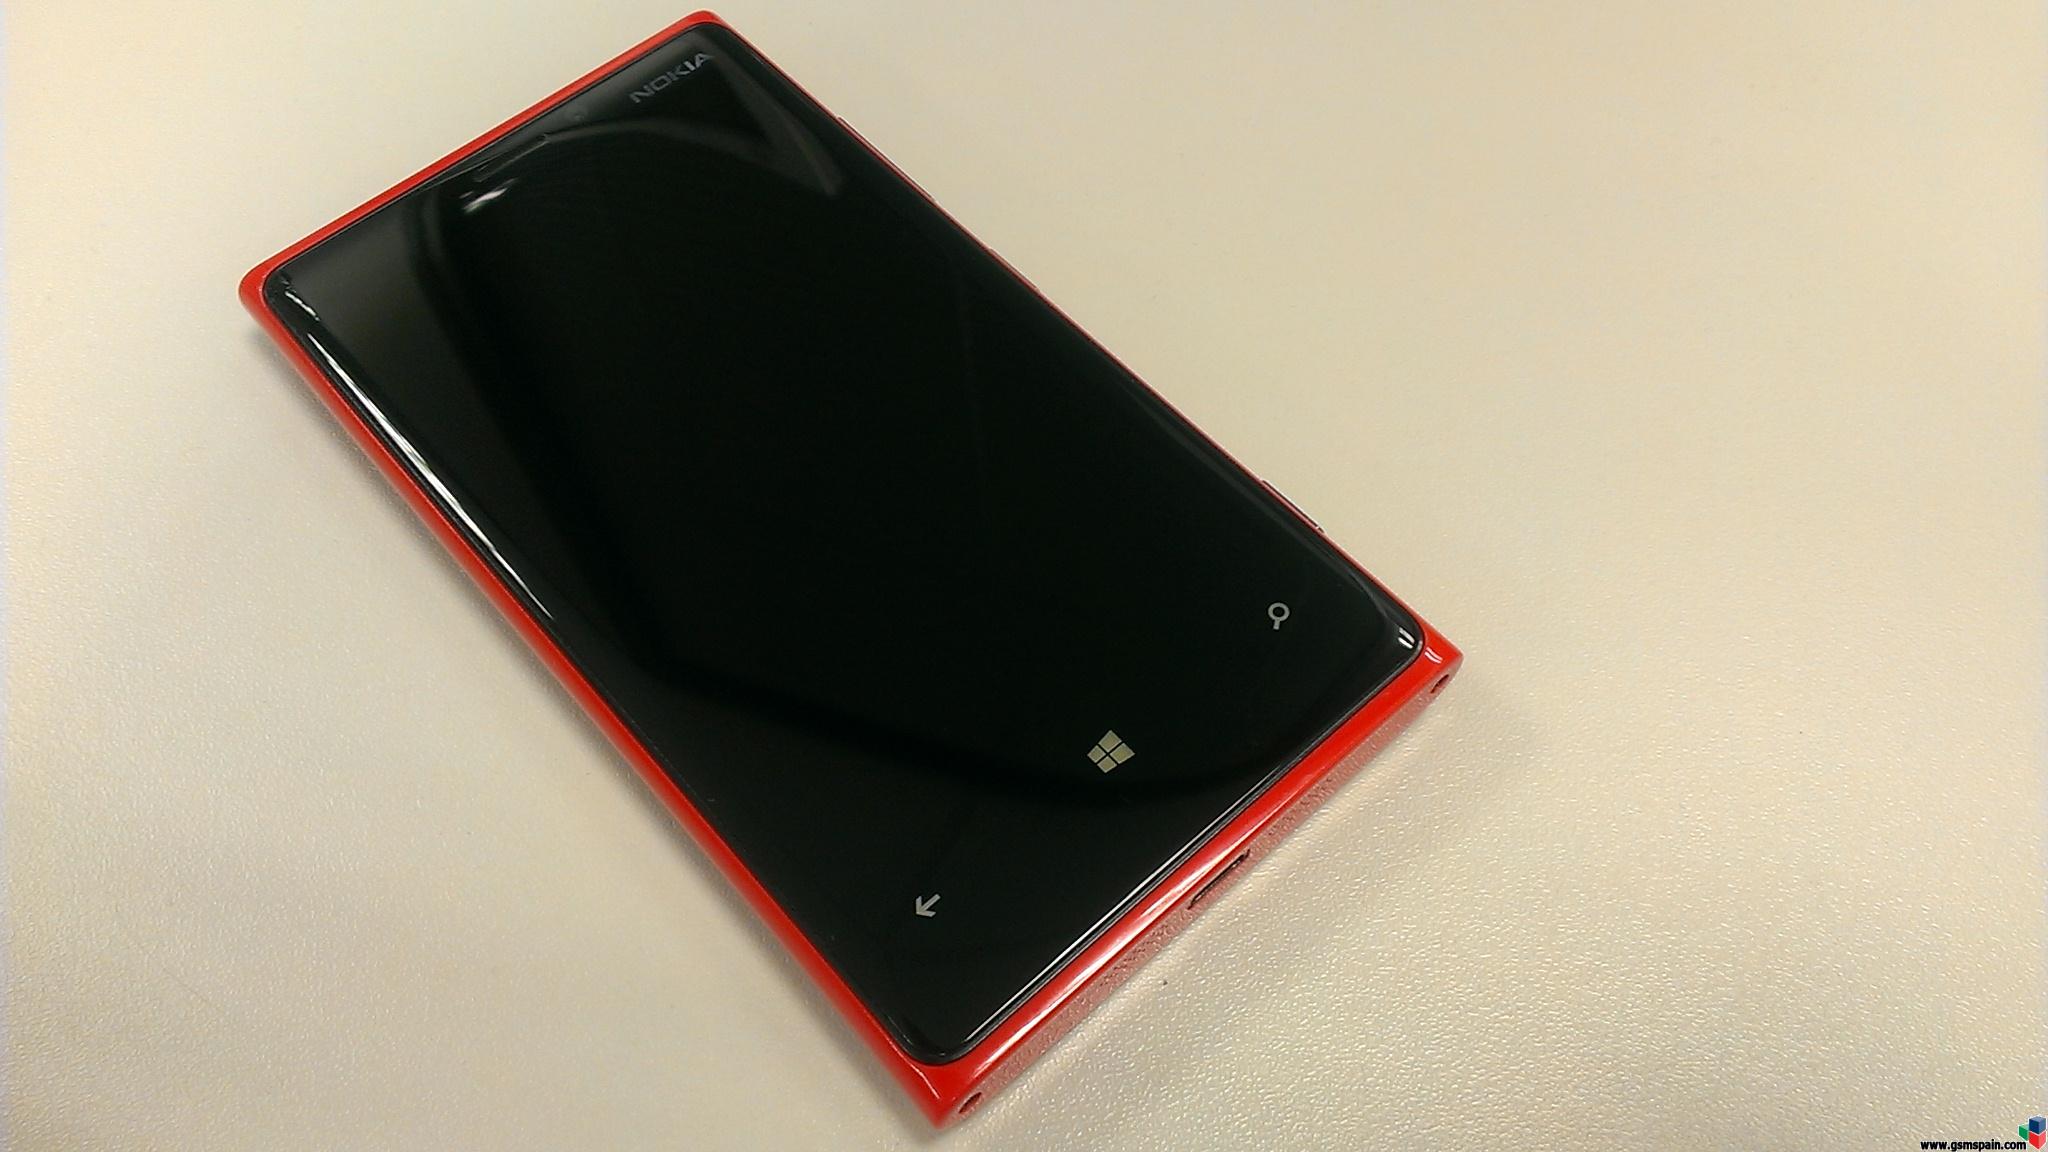 [CAMBIO] [VENDO] Nokia Lumia 920 Rojo Libre de origen con Amber